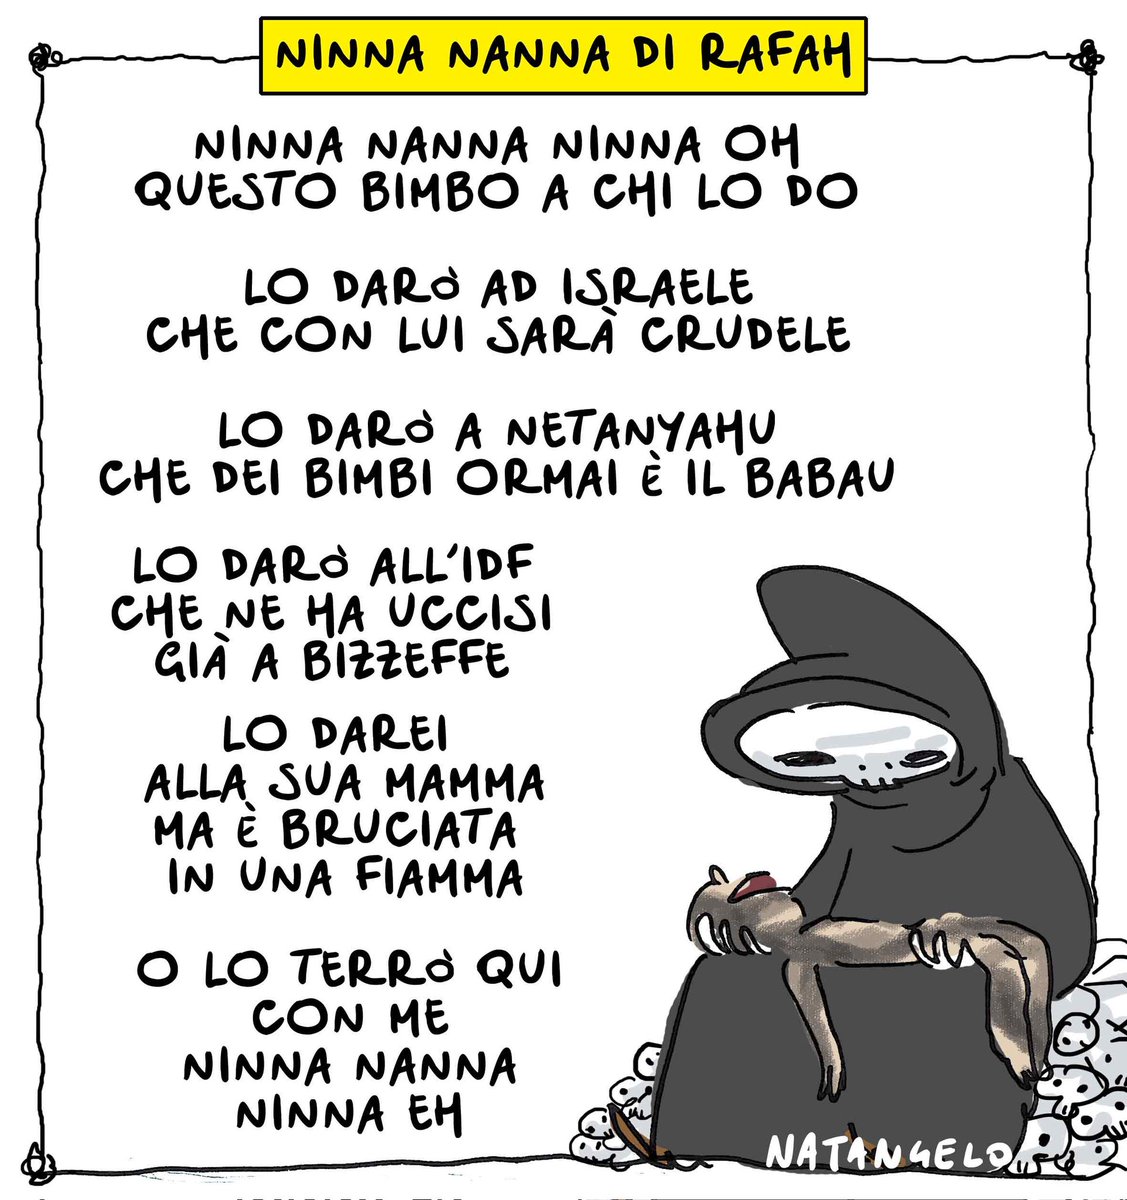 Rafah lullaby - la mia vignetta per Il Fatto Quotidiano oggi in edicola! 

#rafah #israele #palestina #alleyesonrafah #vignetta #fumetto #memeitaliani #umorismo #satira #humor #natangelo